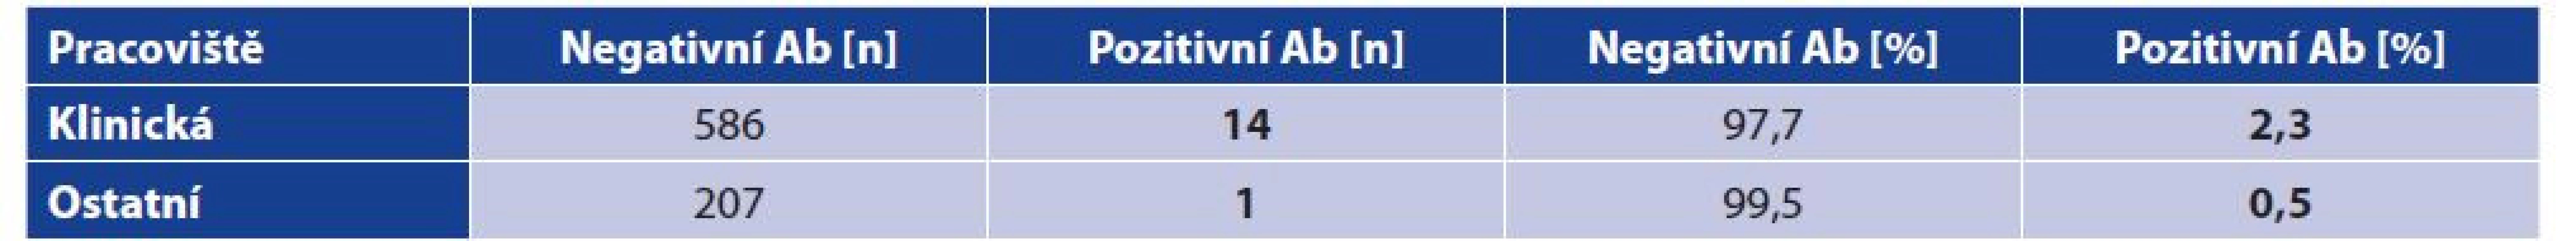 Vliv profese na pozitivitu anti-SARS-CoV-2 protilátek<br>
Table 2. Effect of staff category on the positivity for anti-SARS-CoV-2 antibodies